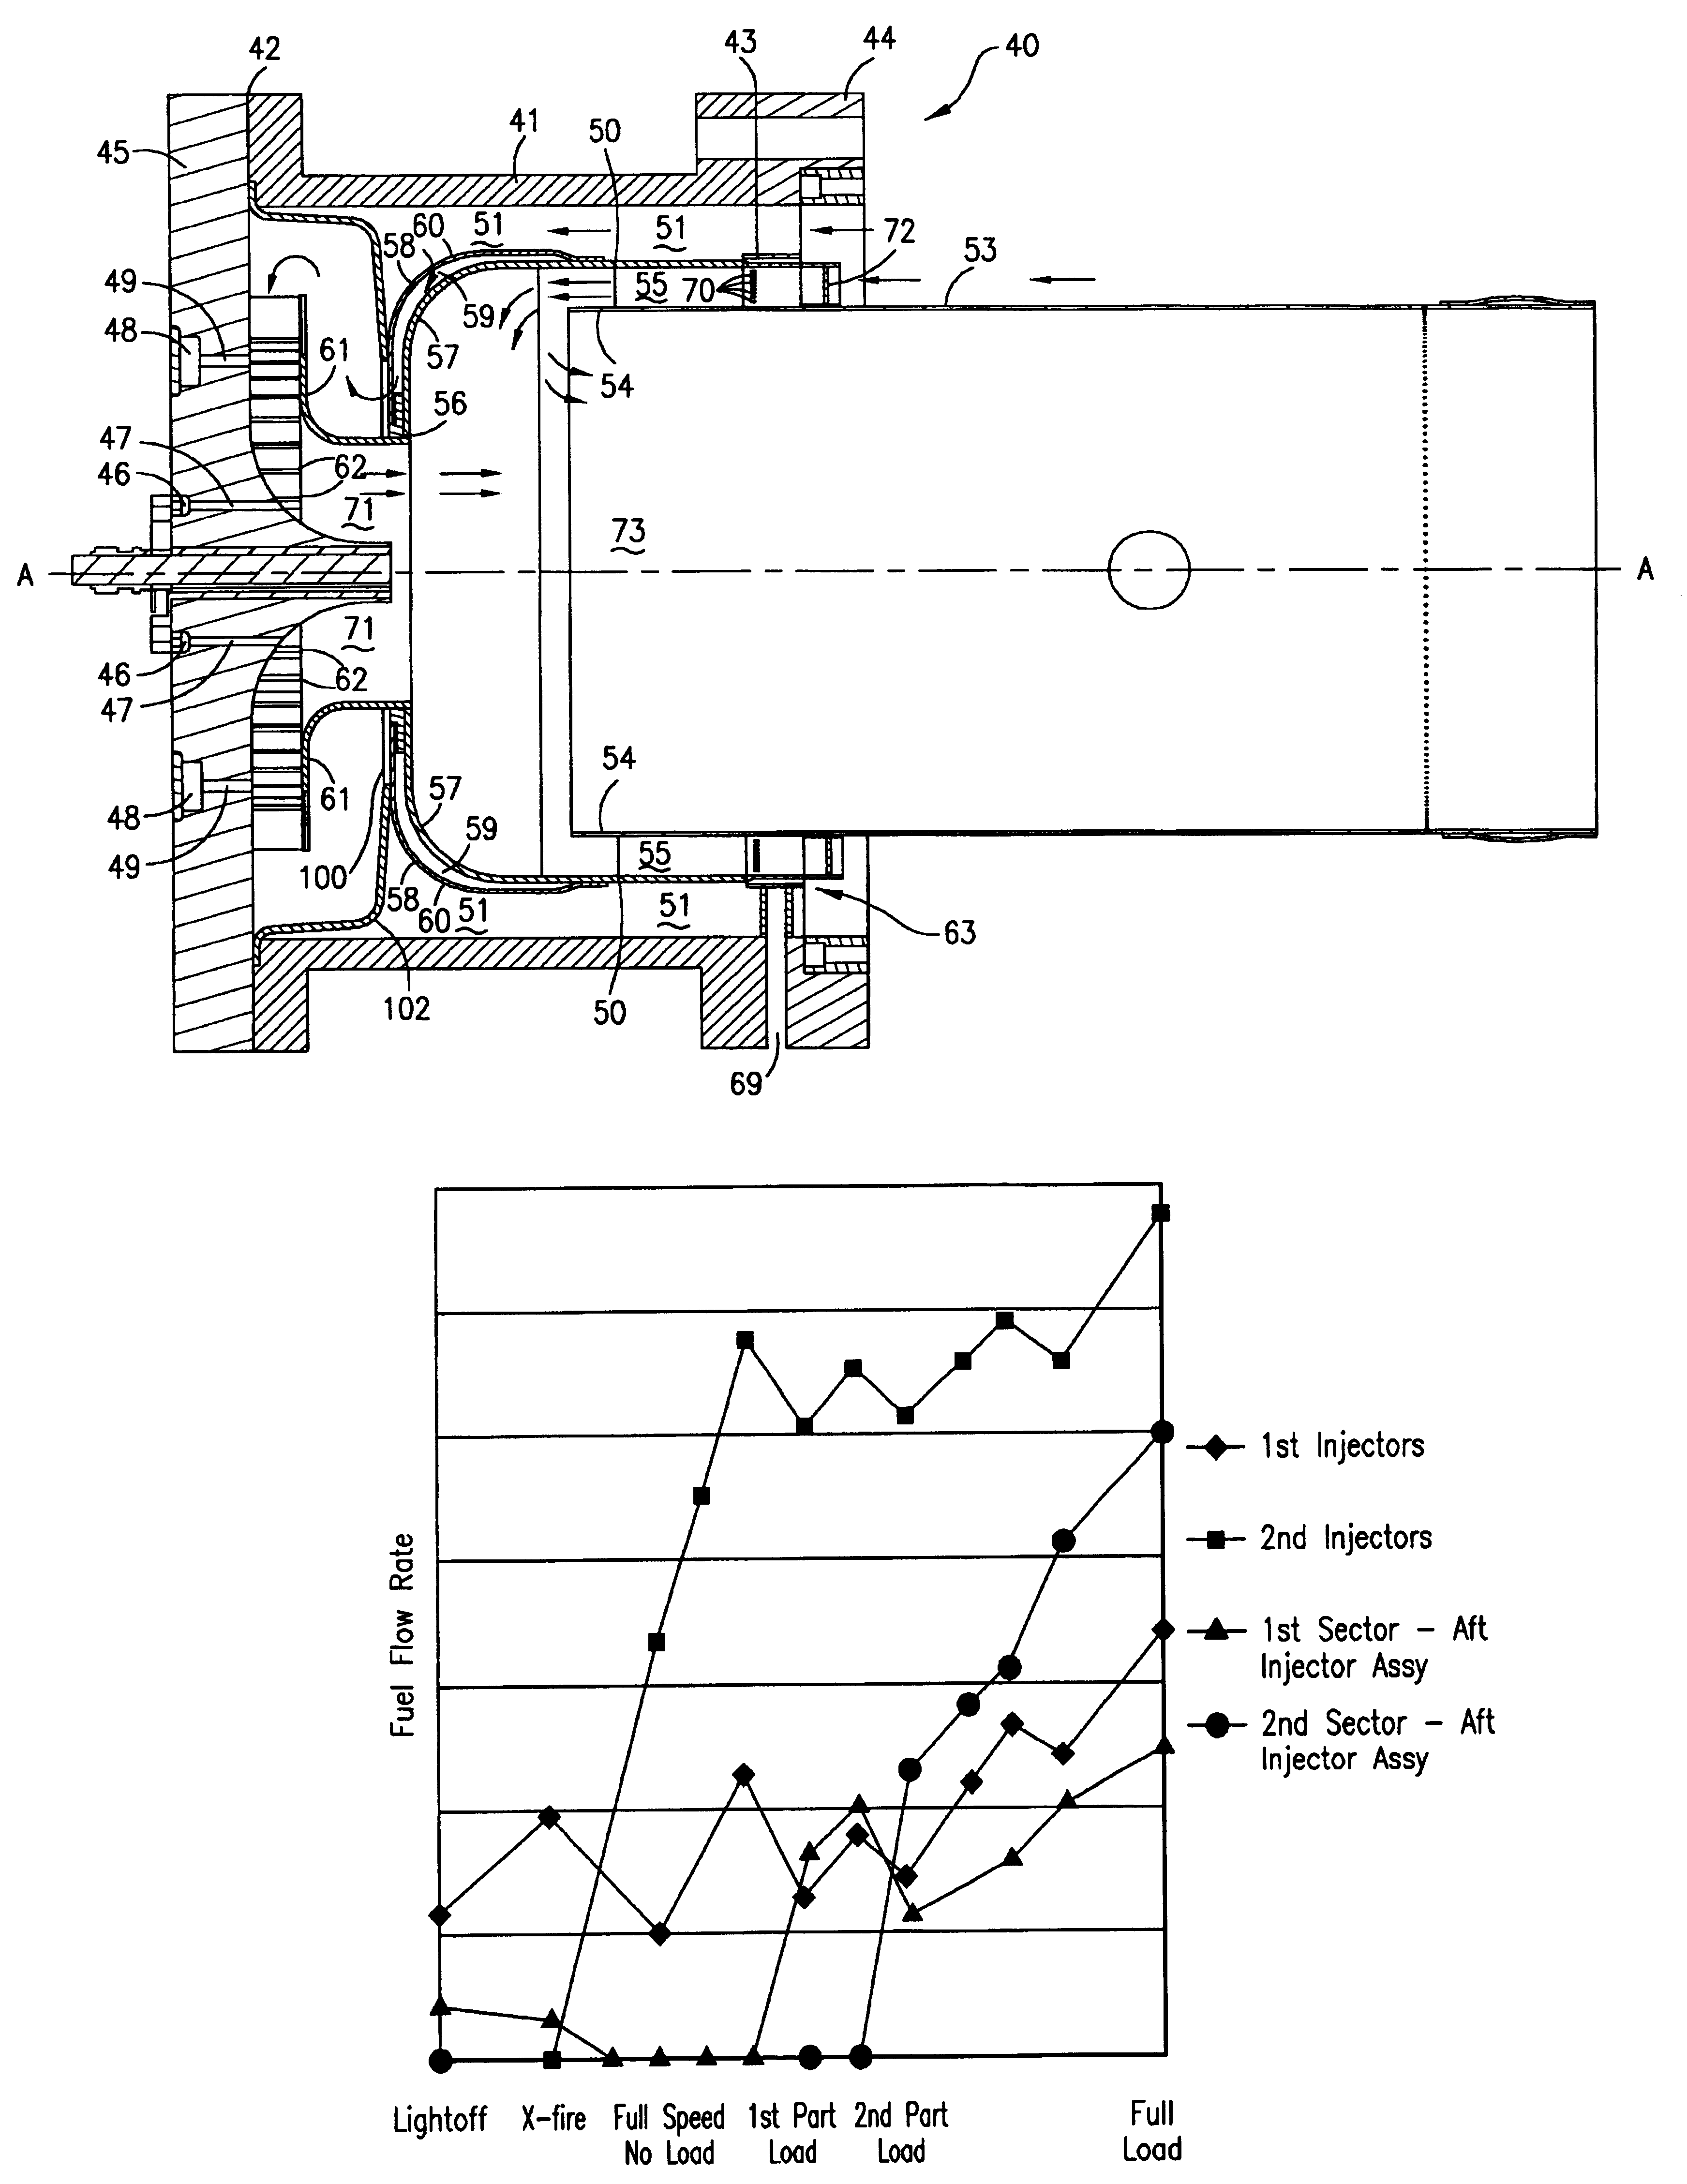 Method of operating a flamesheet combustor